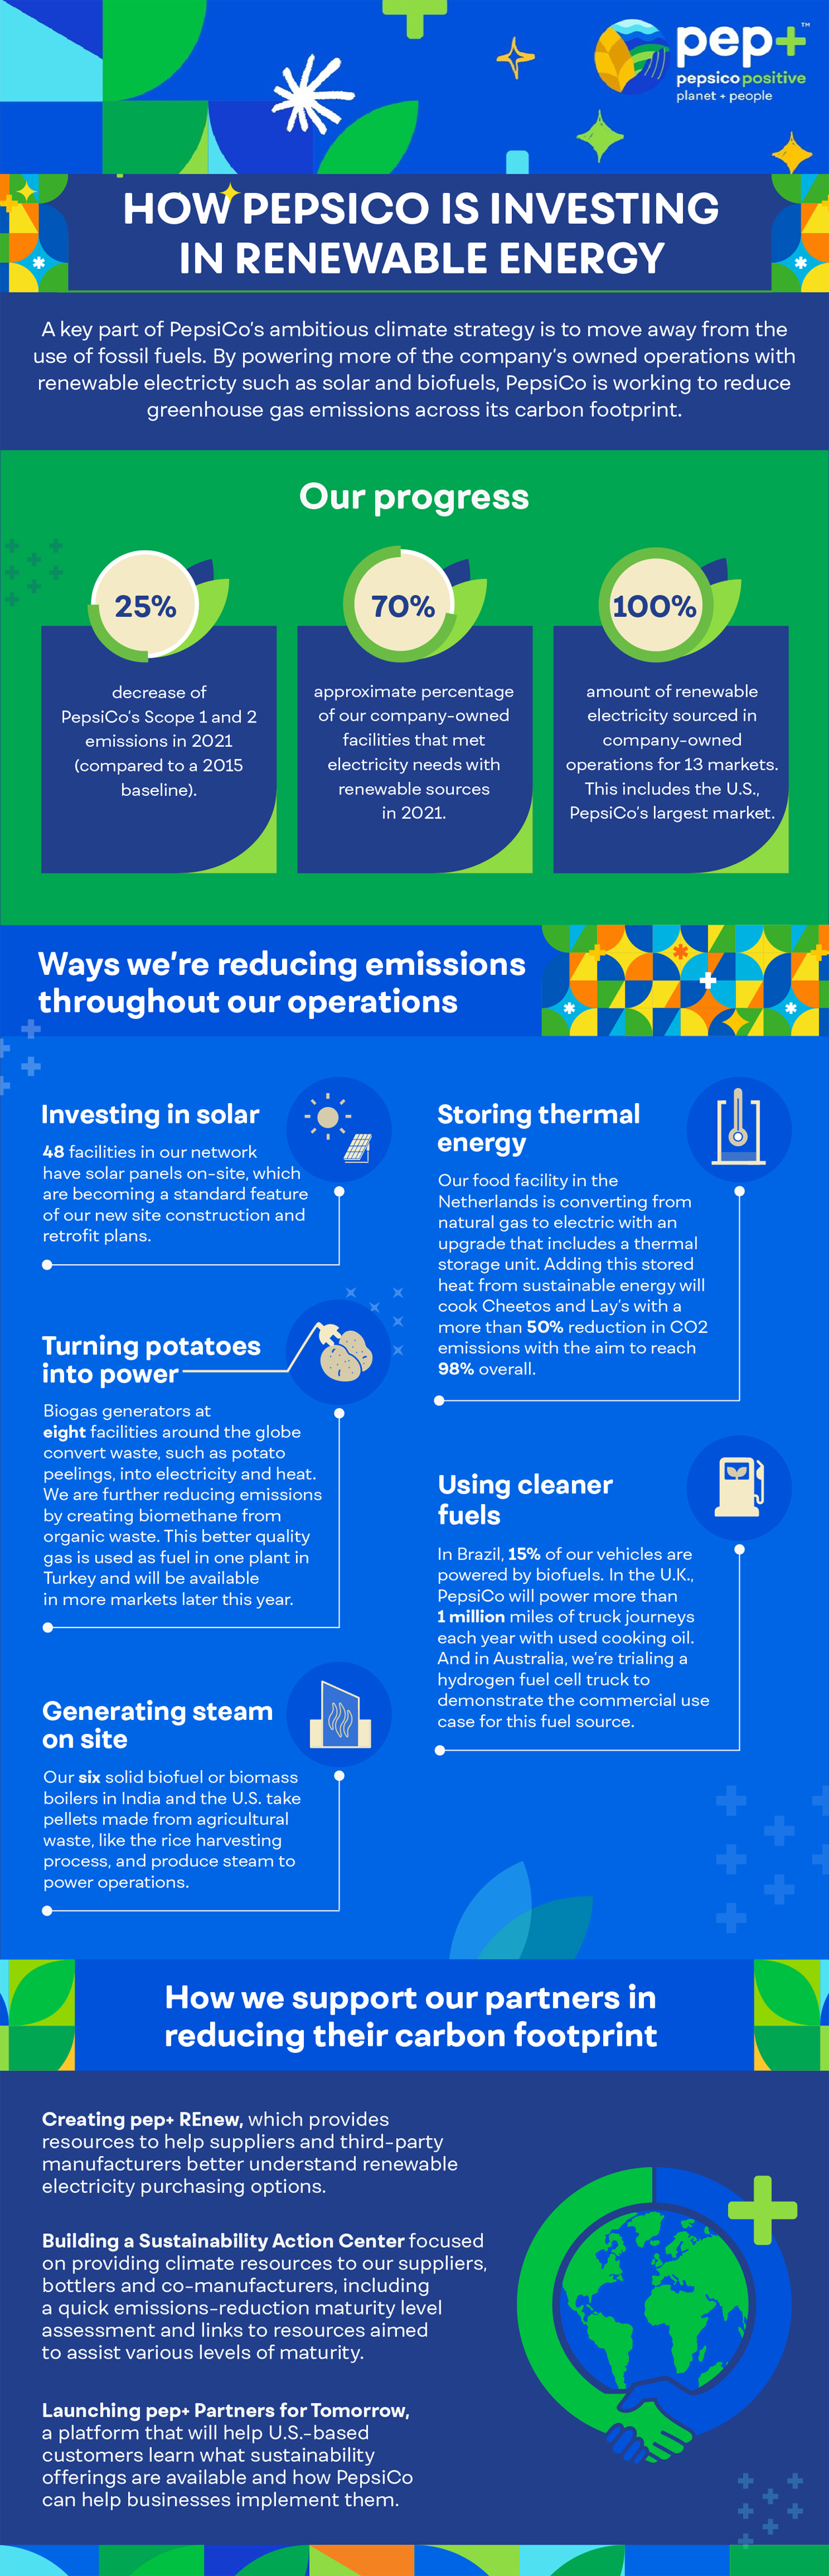 How PepsiCo is investing in renewable energy infographic